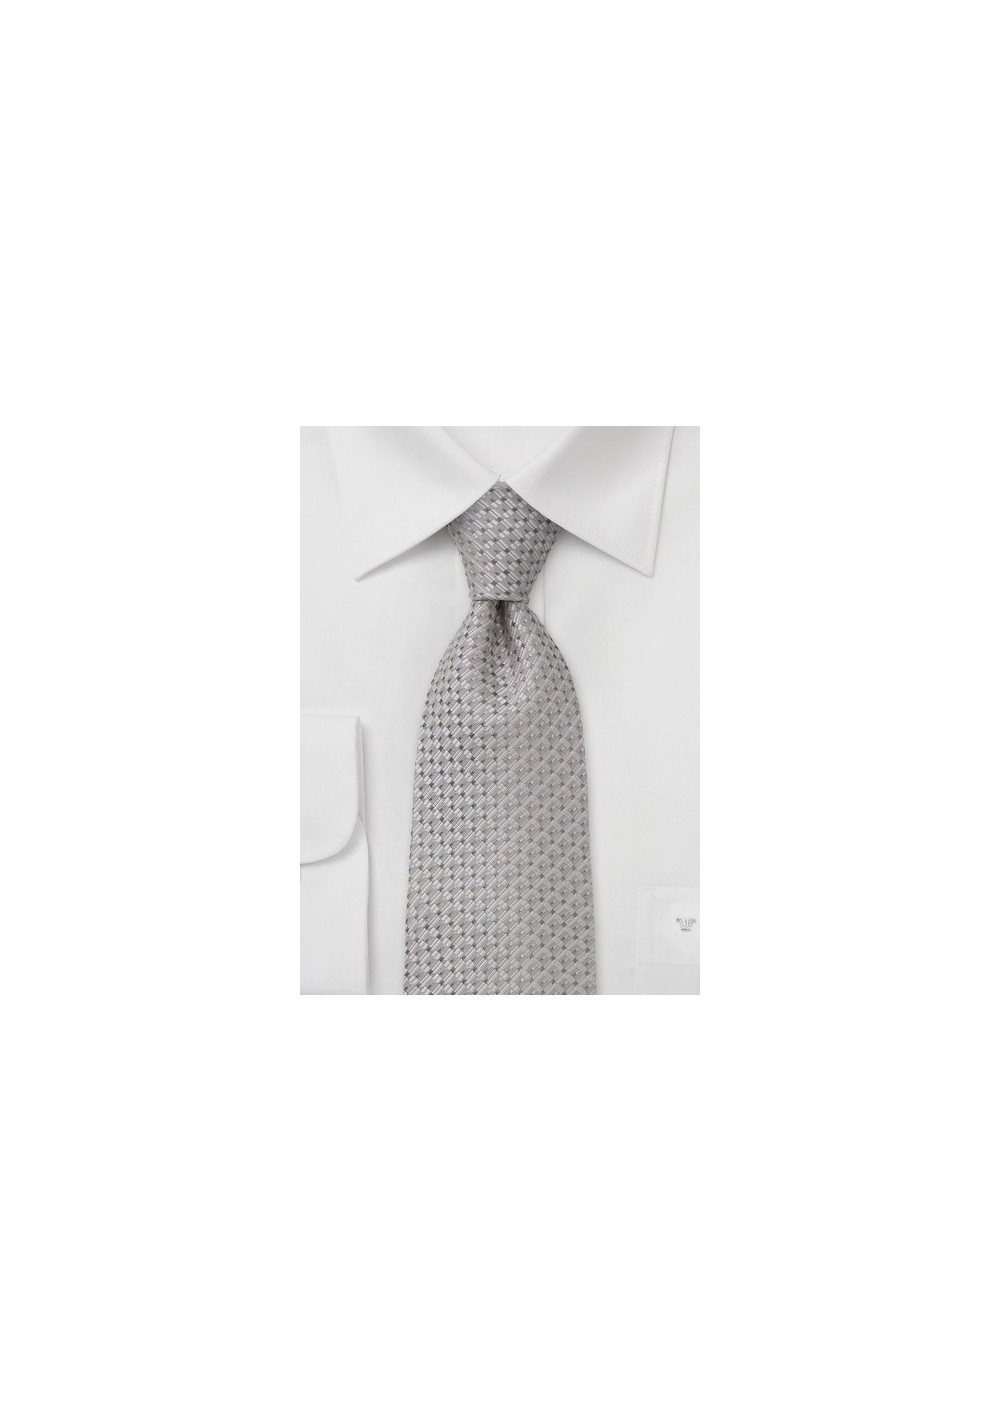 Silver silk tie  - Necktie in silver with small copper squares